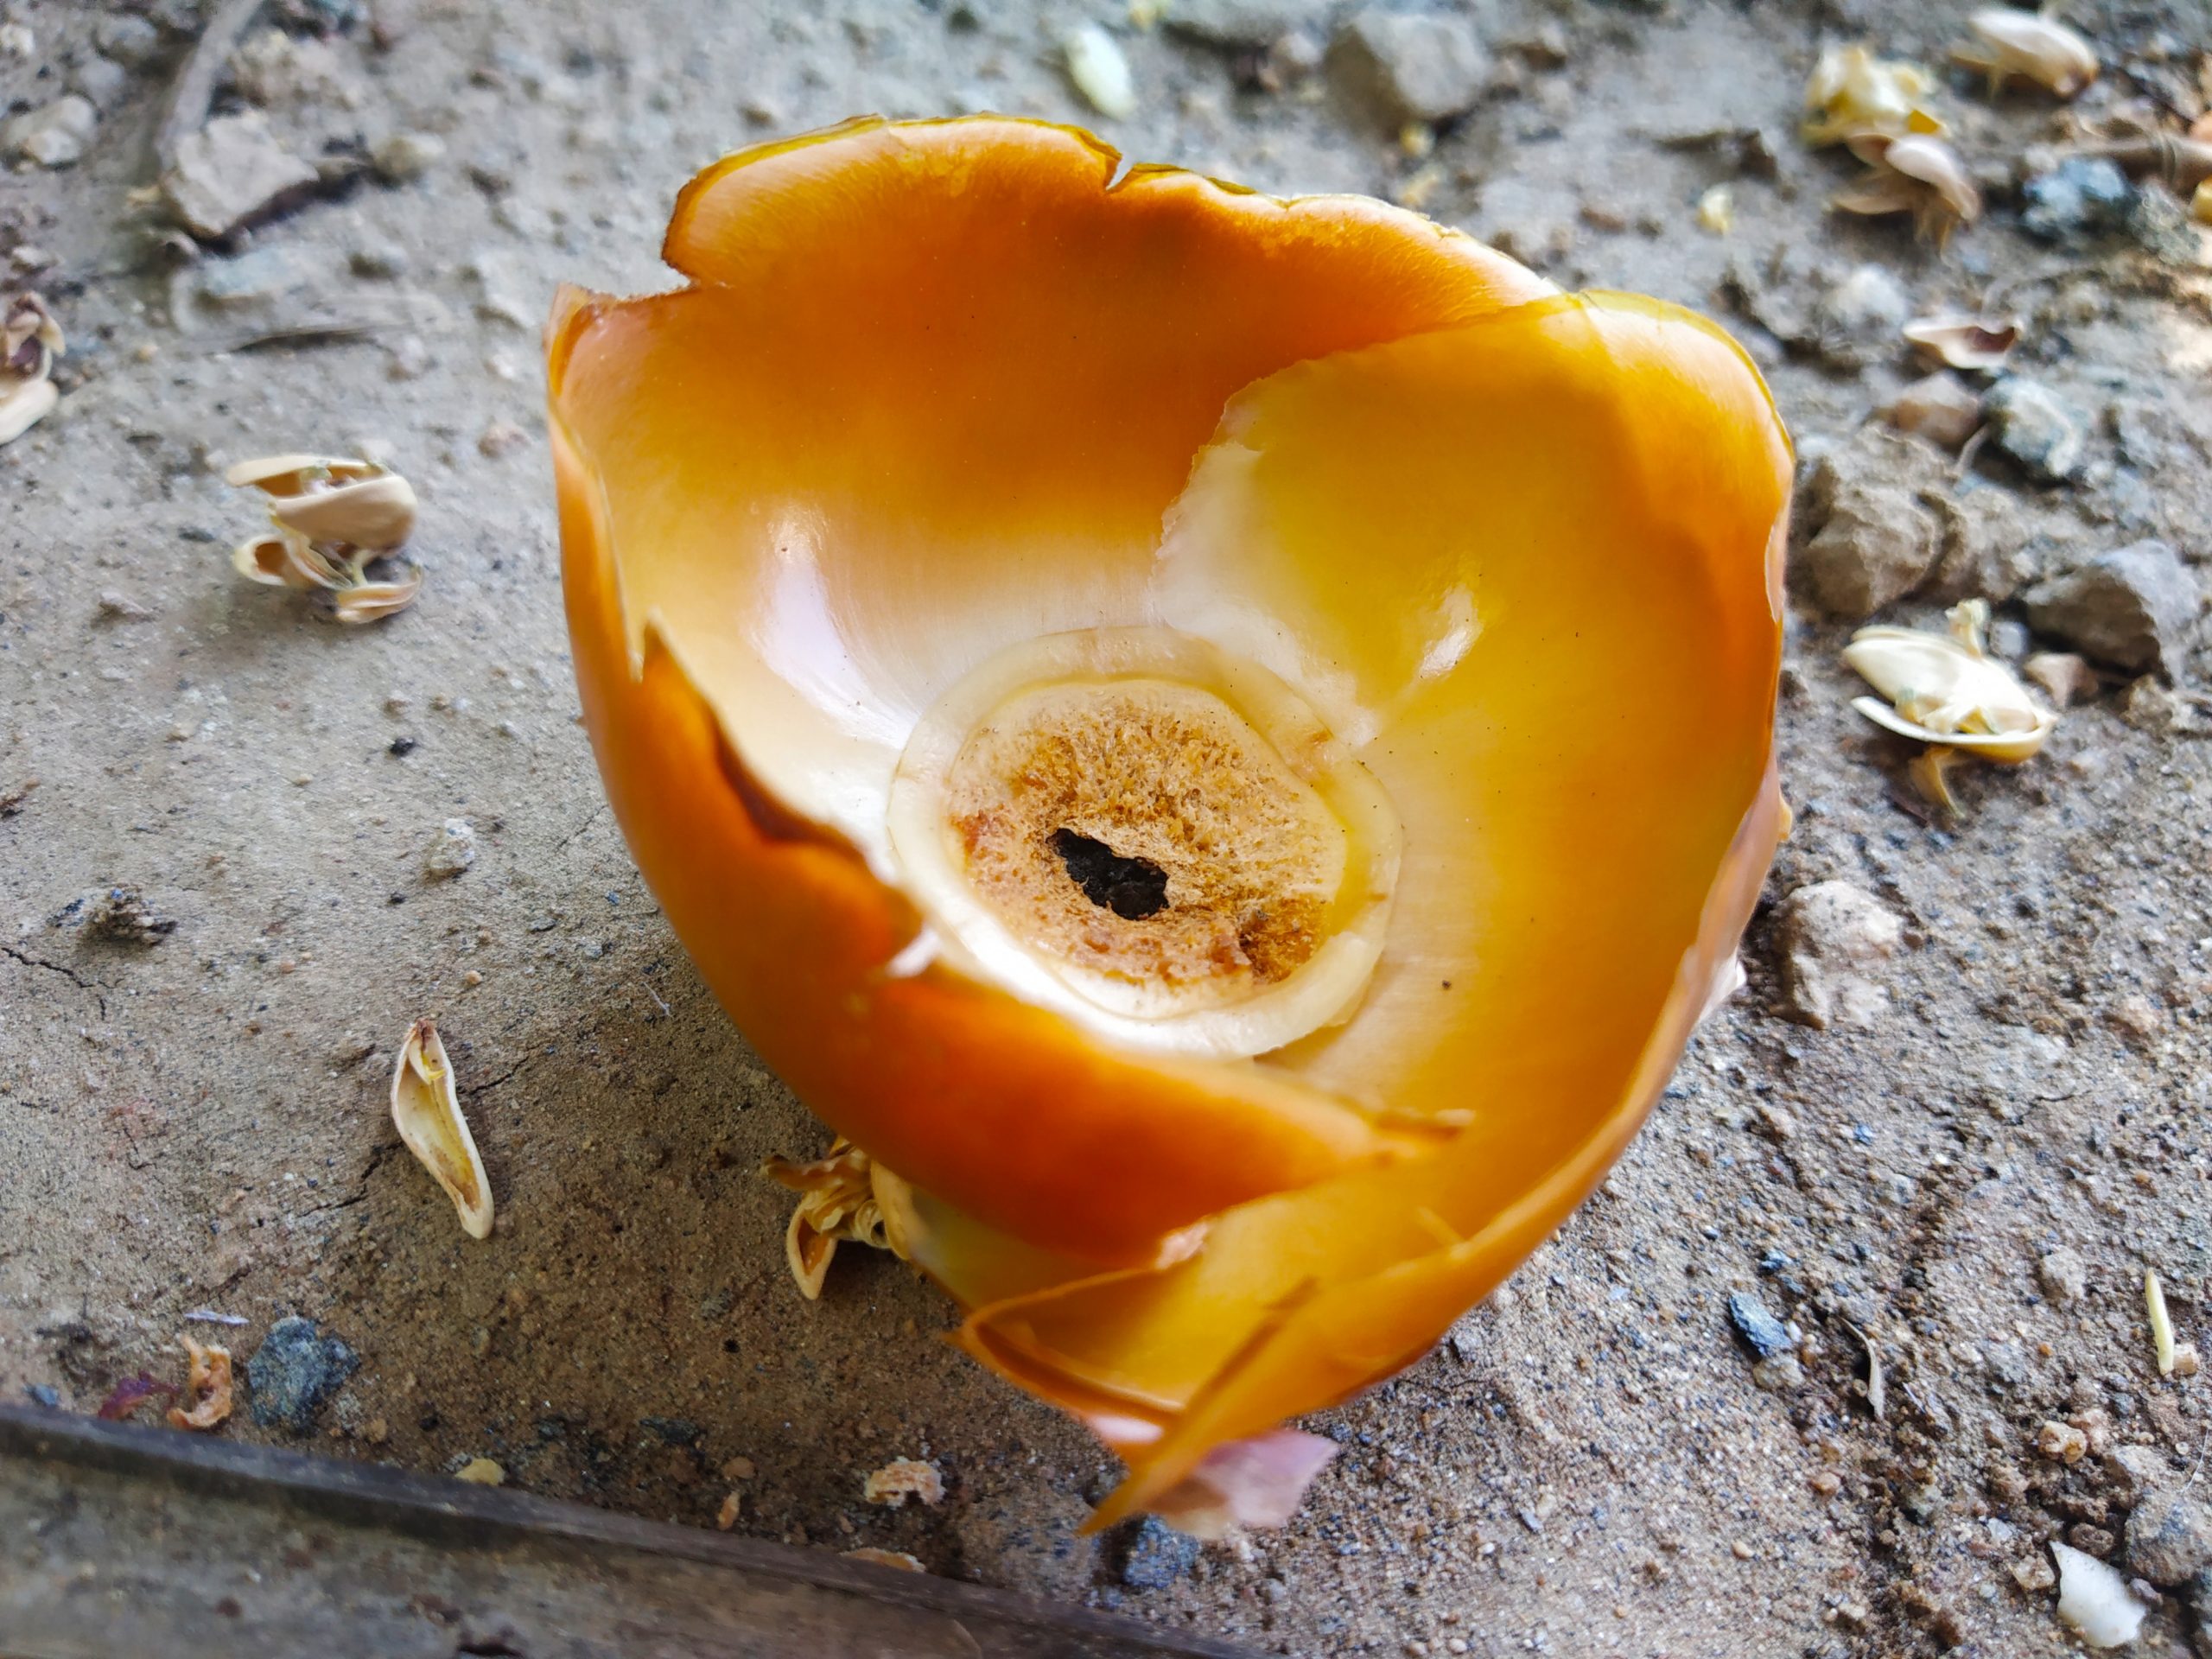 A coconut shell